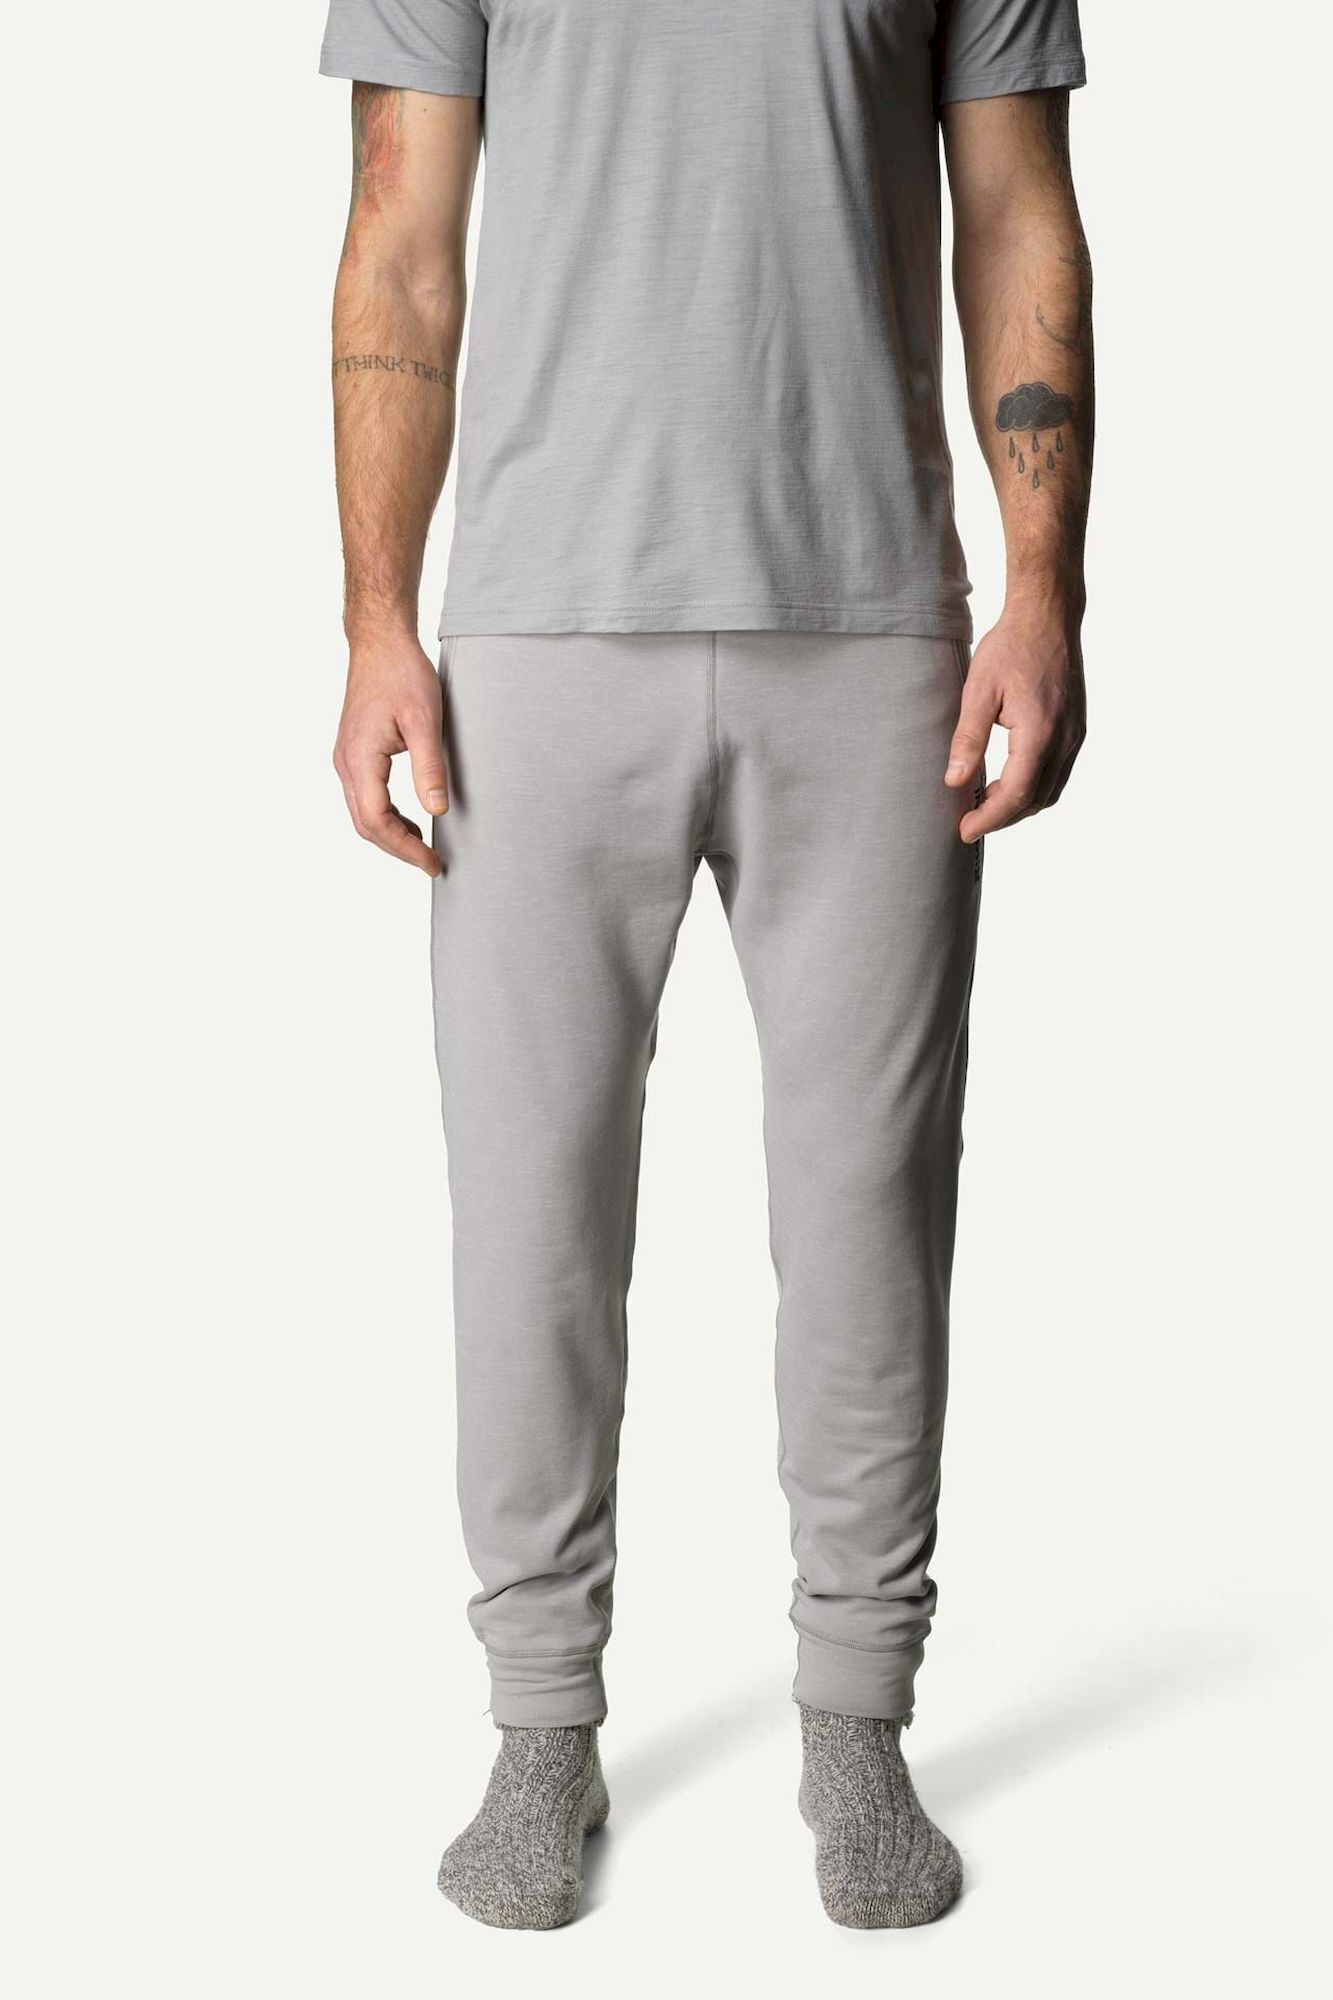 Houdini Sportswear Outright Pants - Pantalon homme | Hardloop